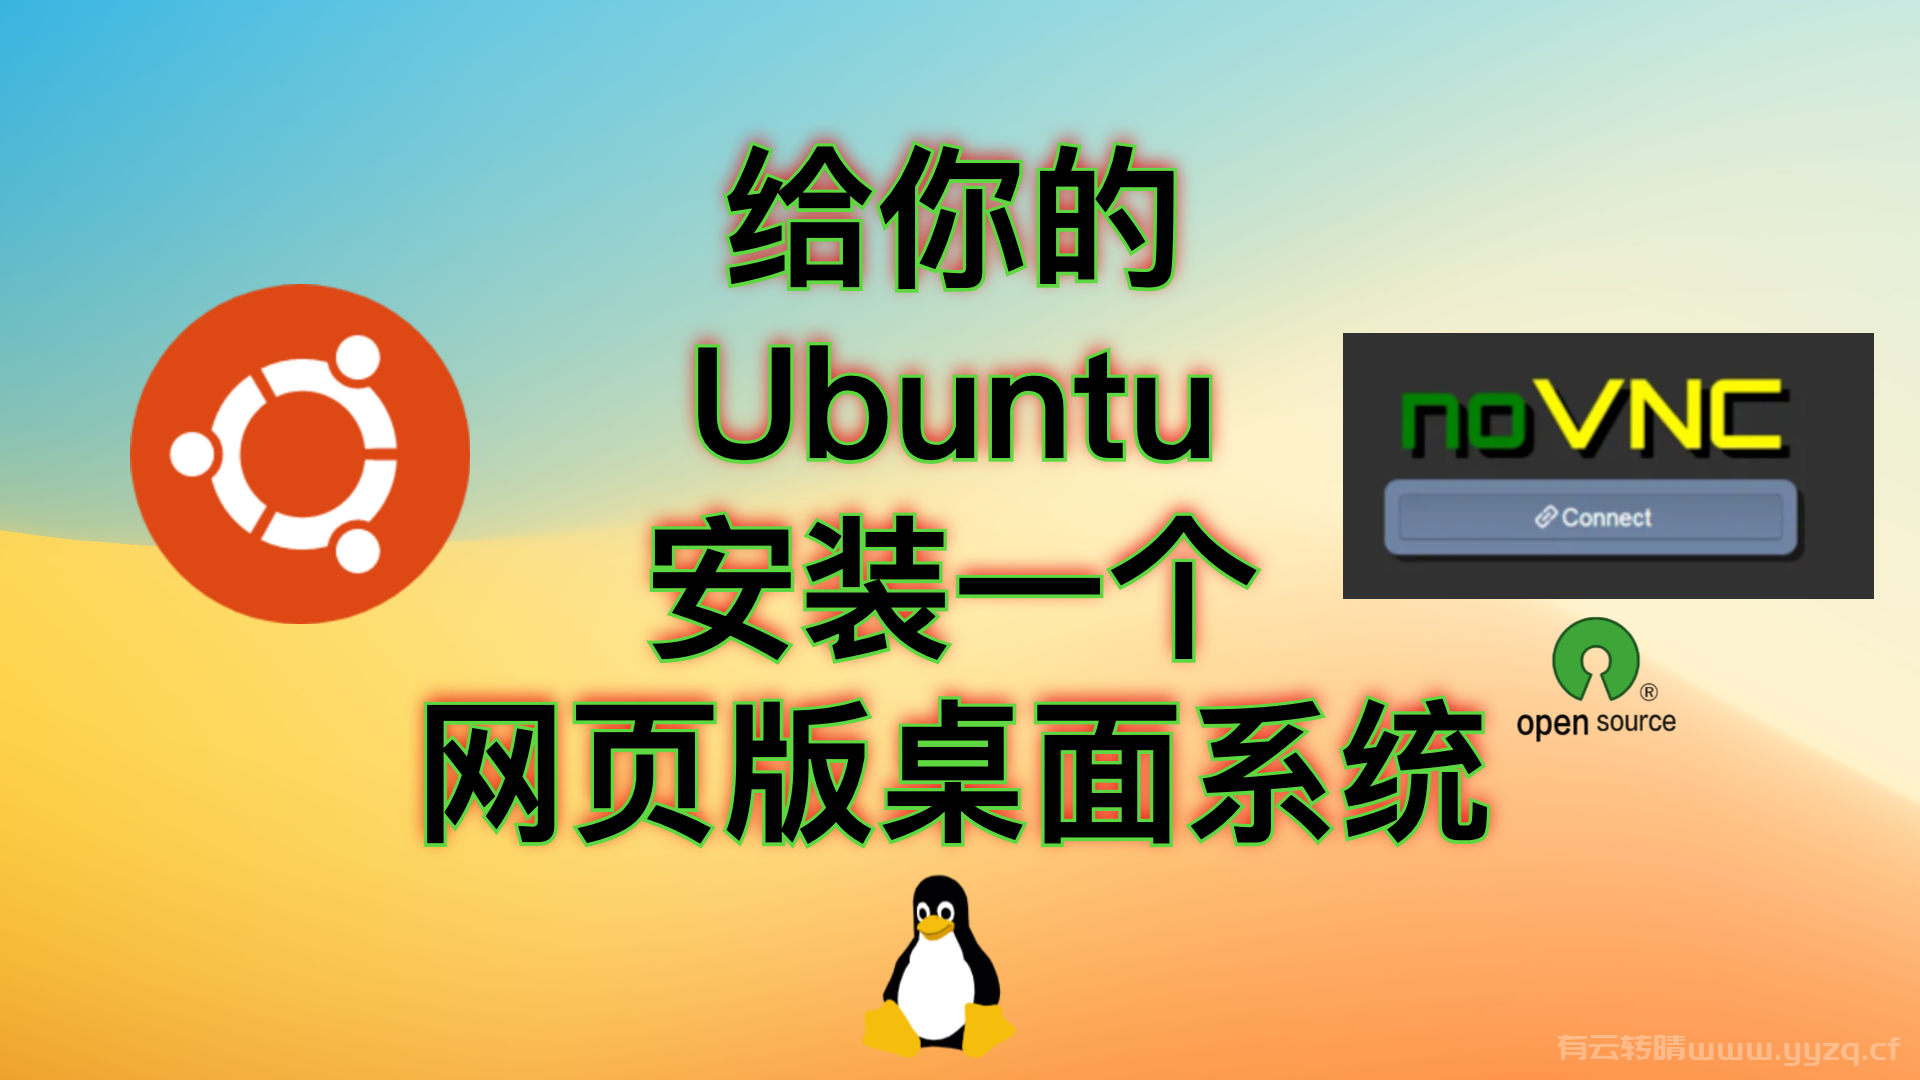 Ubuntu20.04 LTS Docker安装Web Ubuntu 与 Portainer可视化容器管理工具